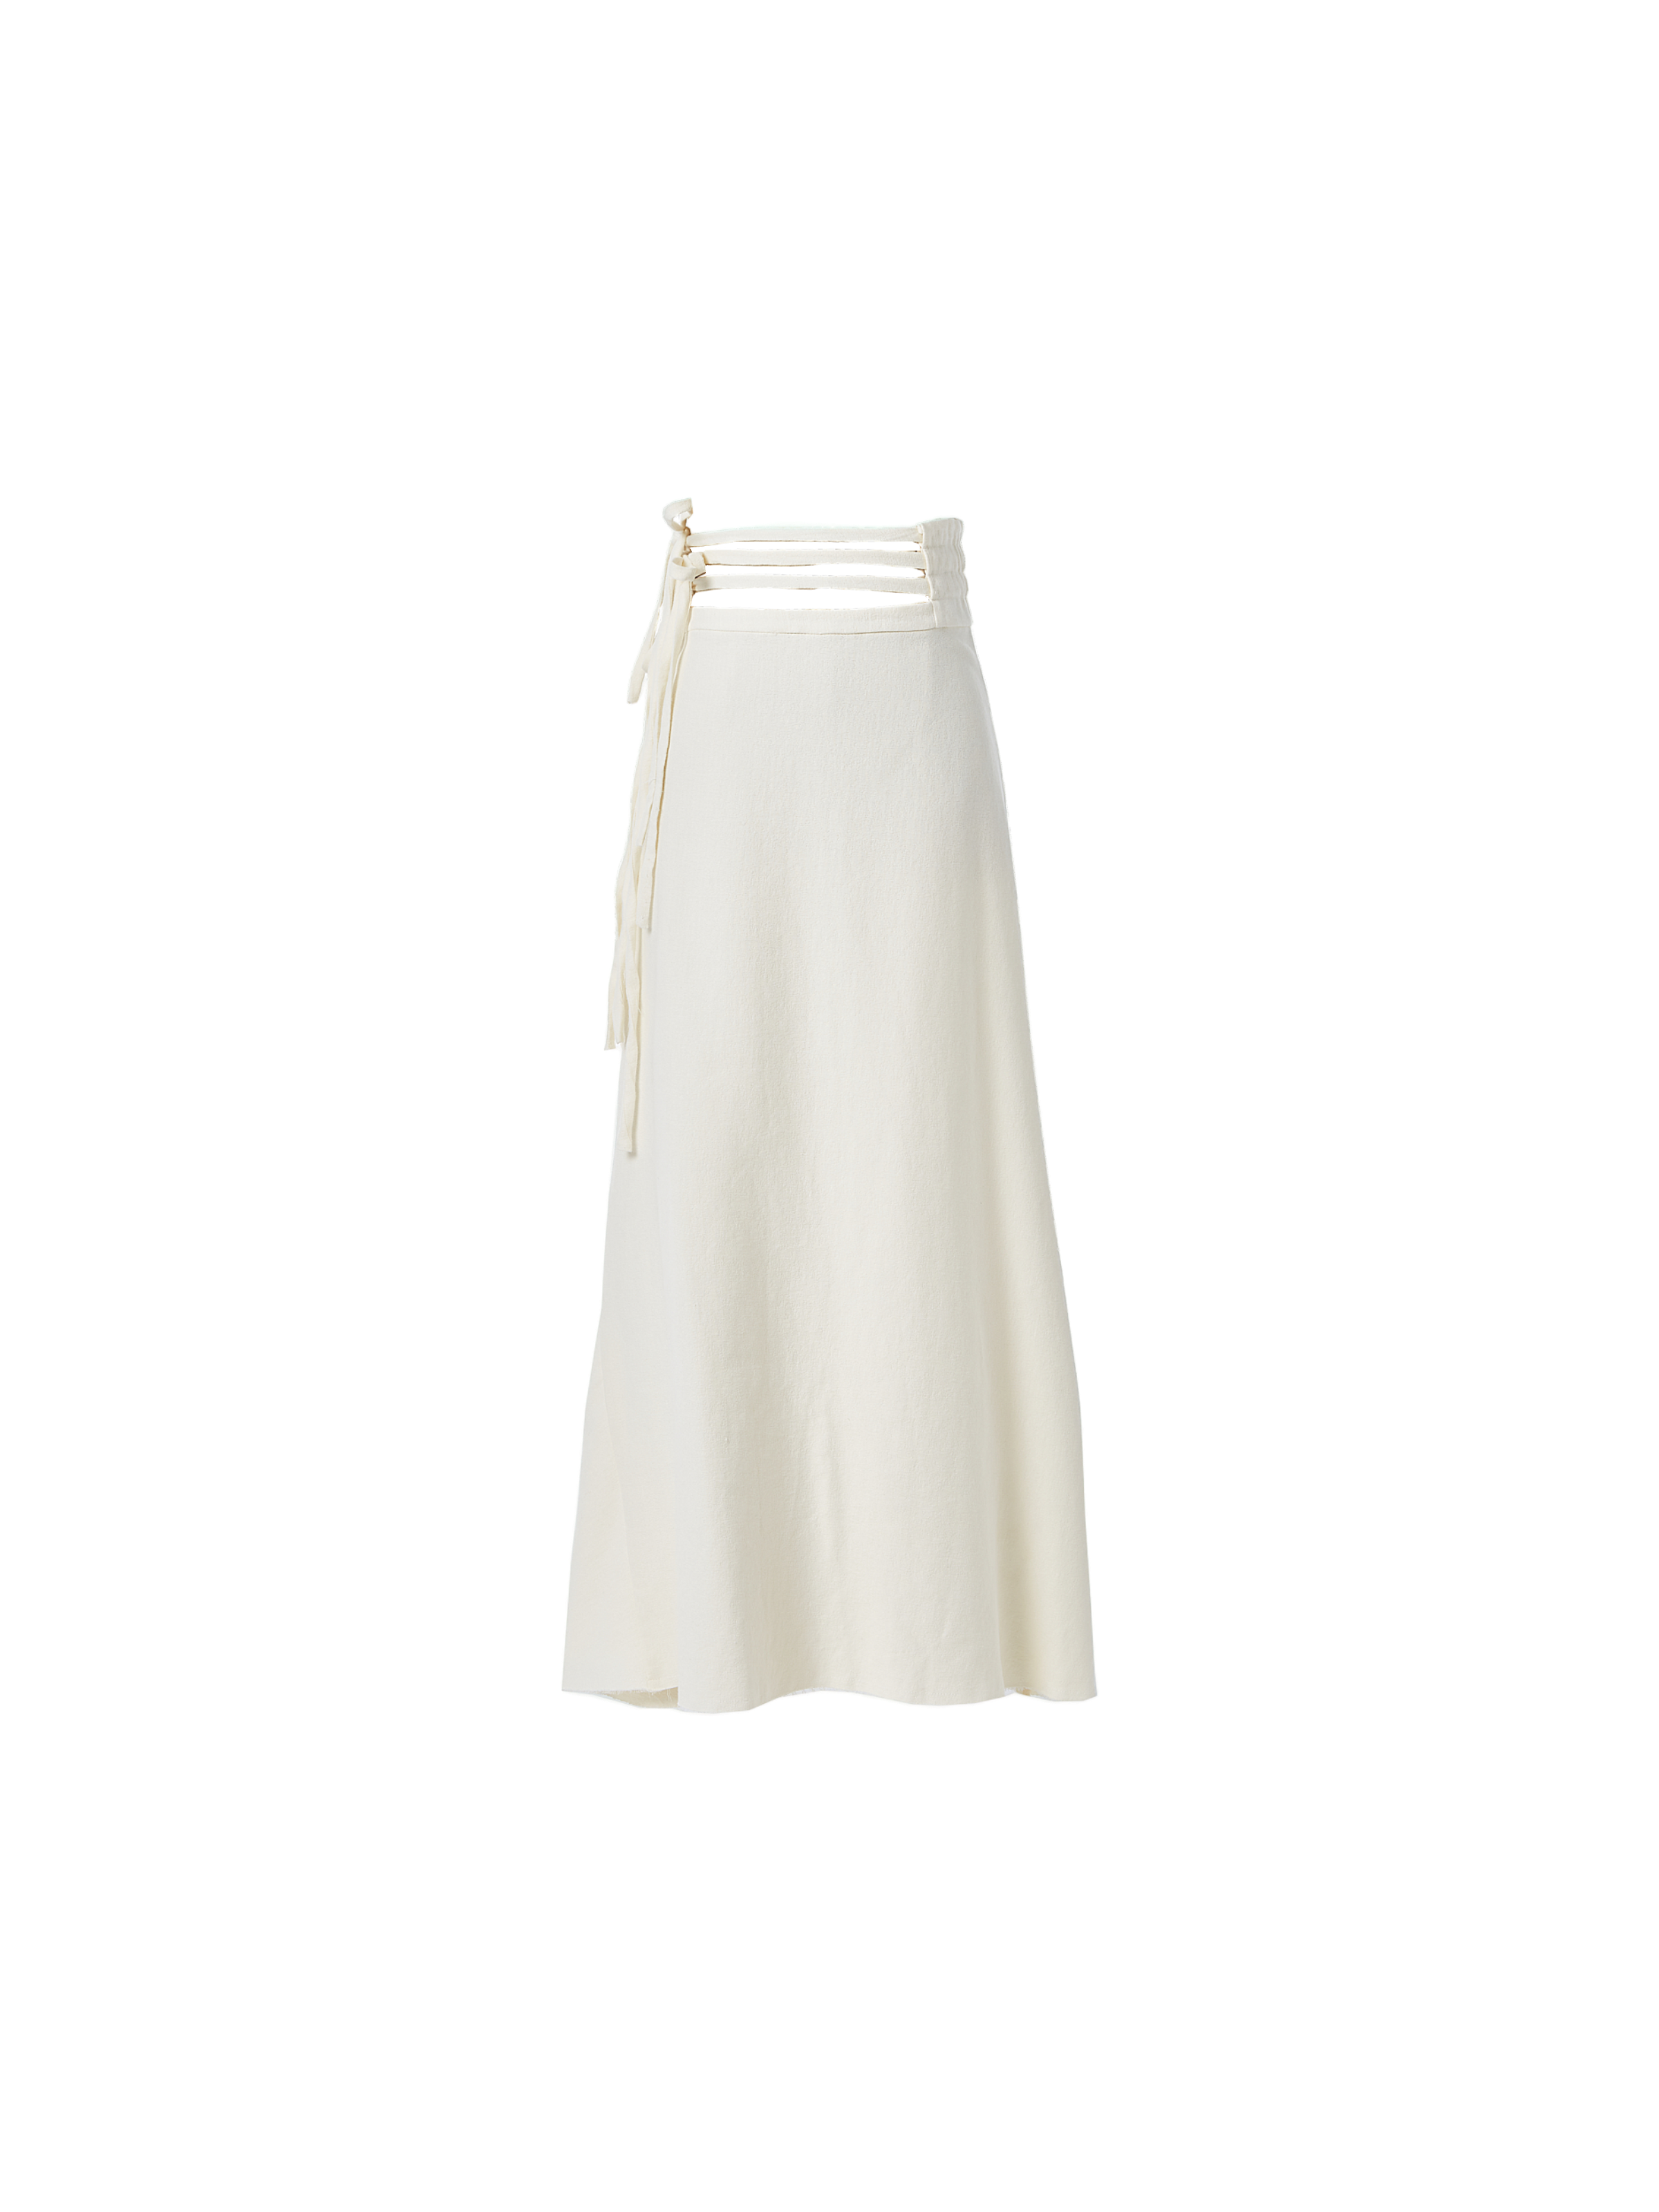 White Lace-Up Belt Skirt